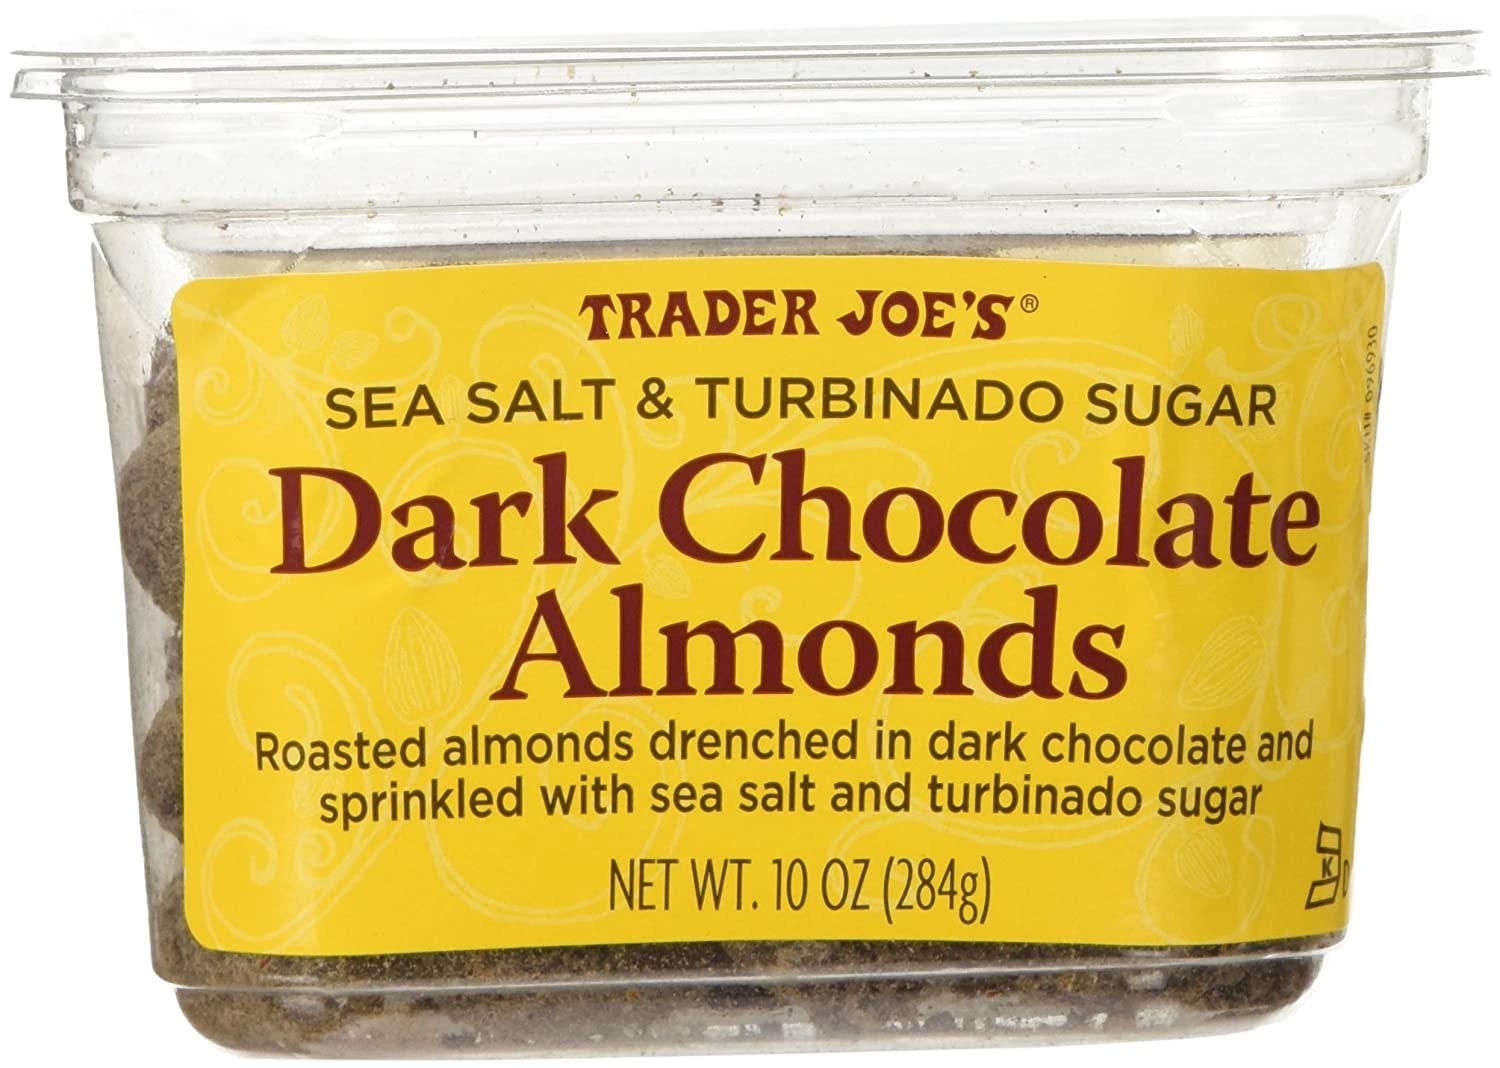 A box of chocolate sea salt and turbinado sugar almonds